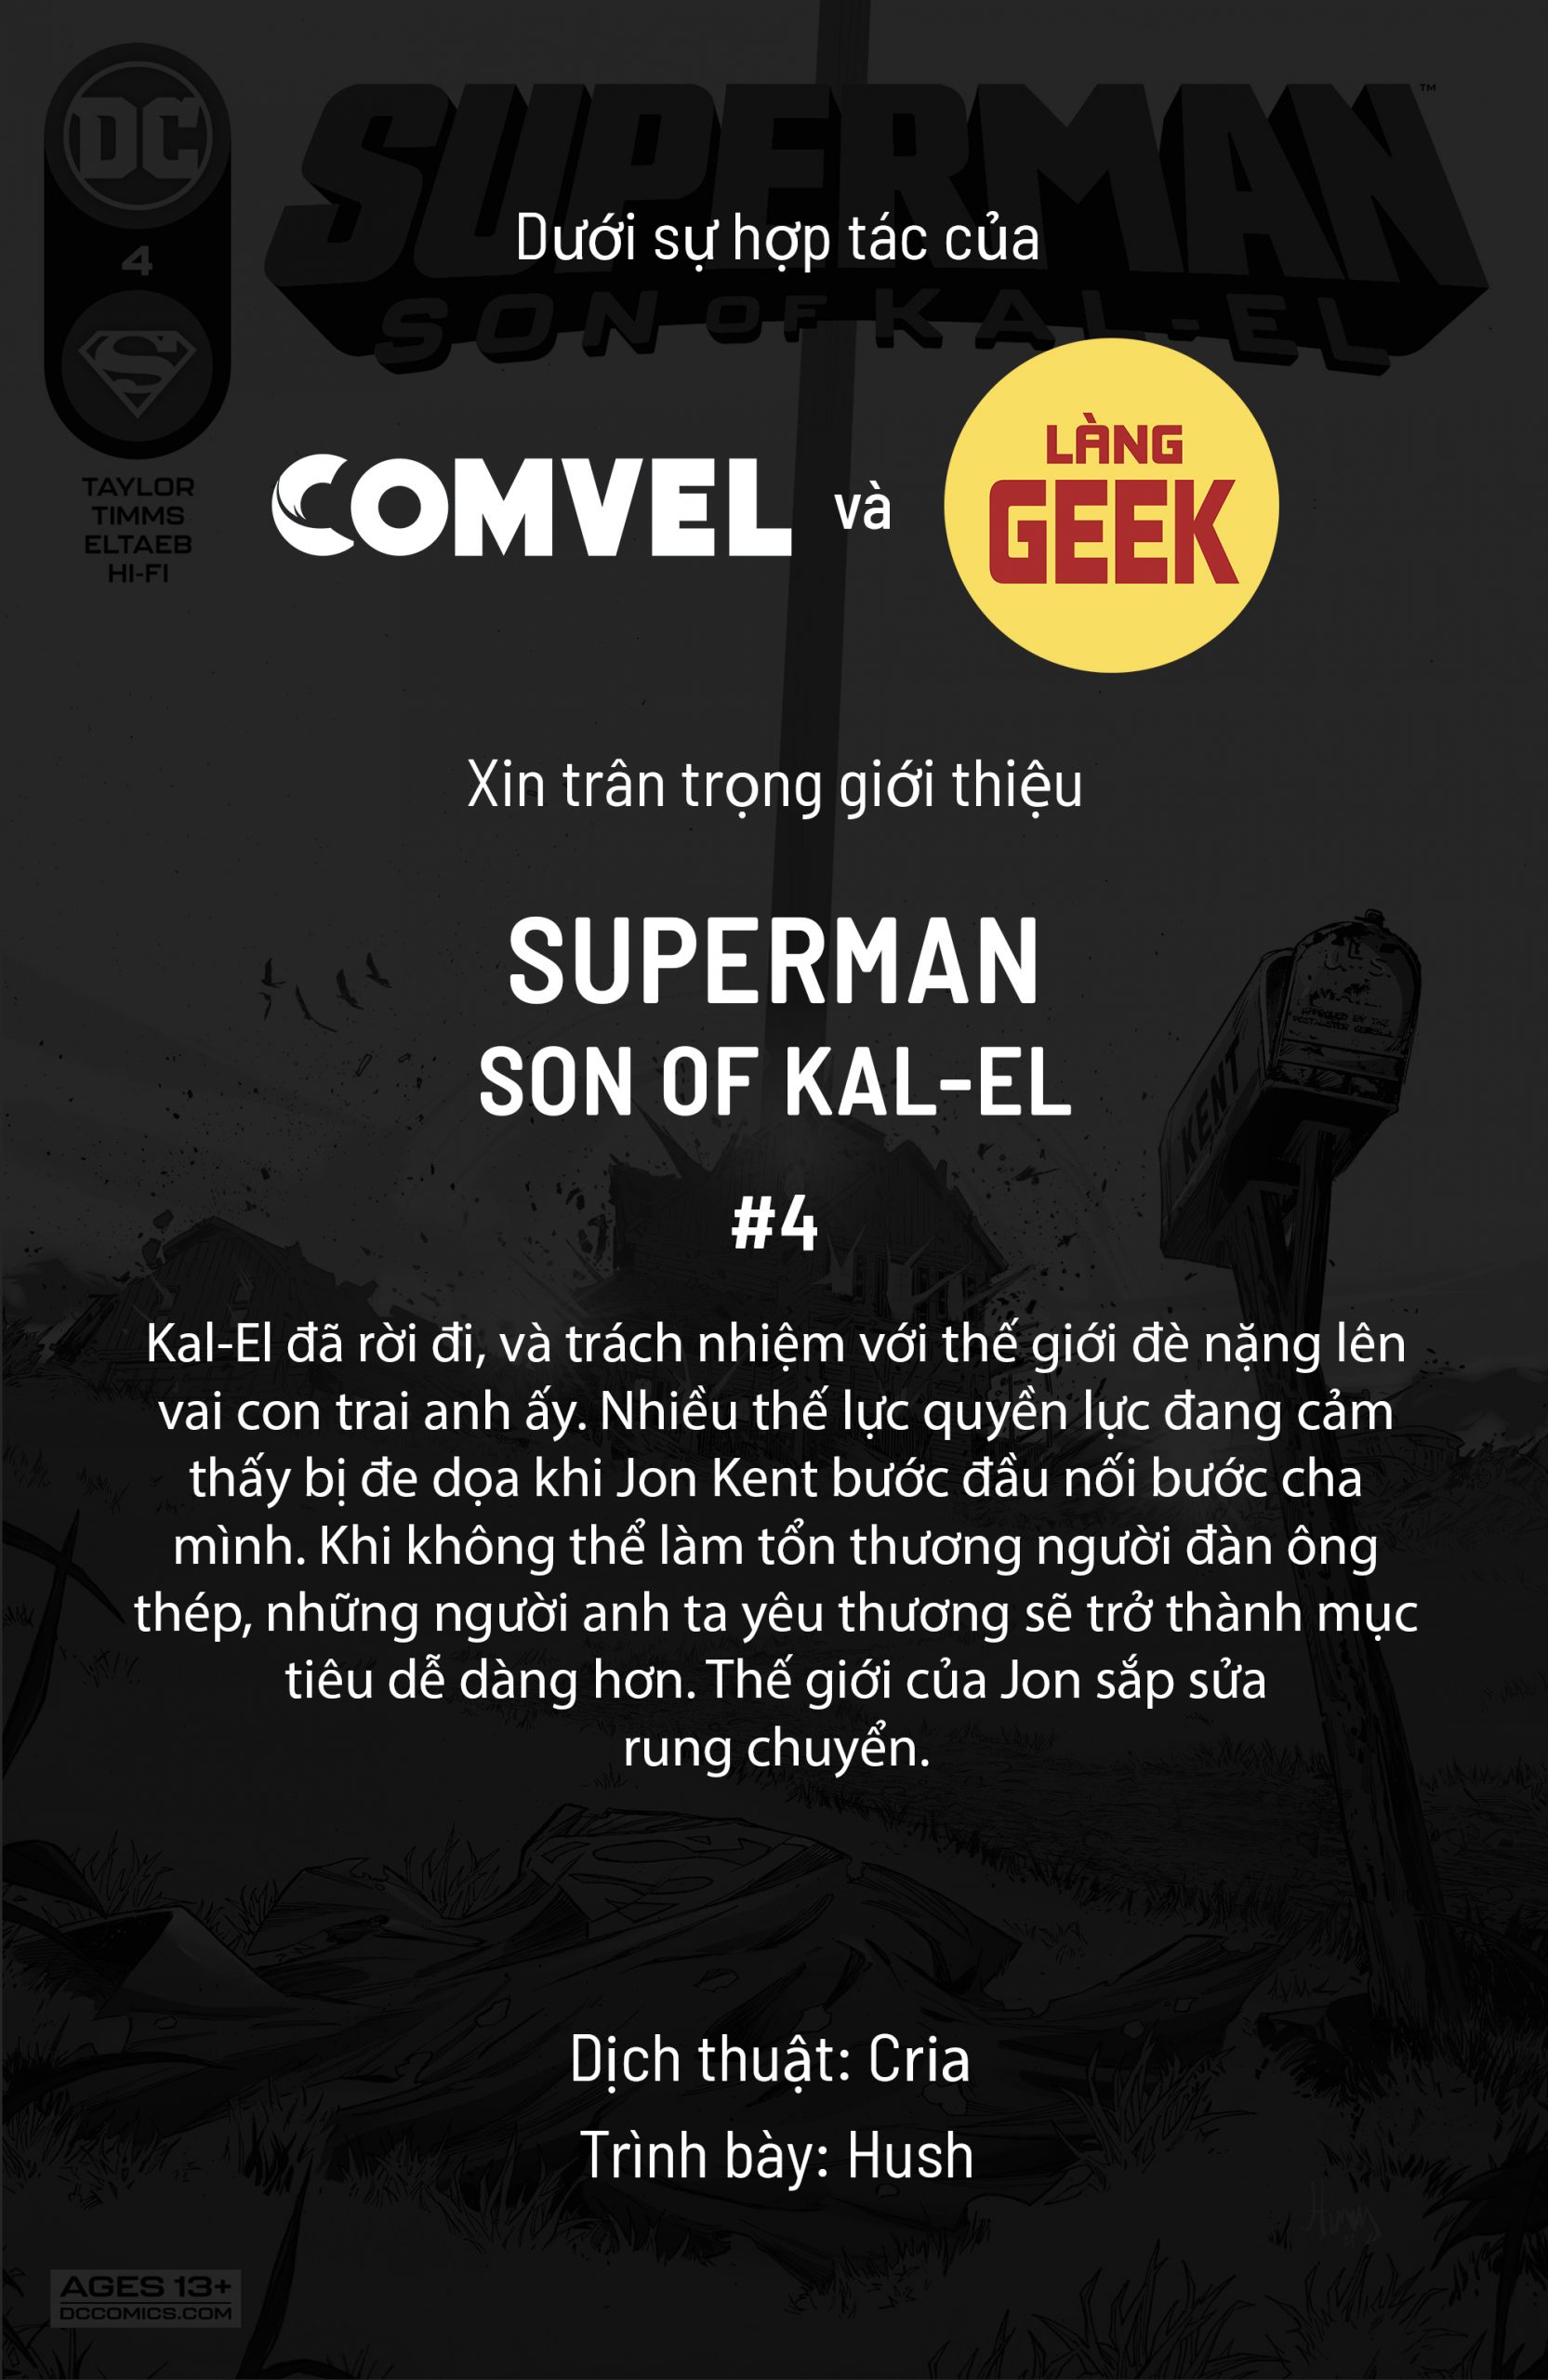 https://langgeek.net/wp-content/webpc-passthru.php?src=https://langgeek.net/wp-content/uploads/2021/12/Superman-Son-of-Kal-El-2021-004-00-scaled.jpg&nocache=1